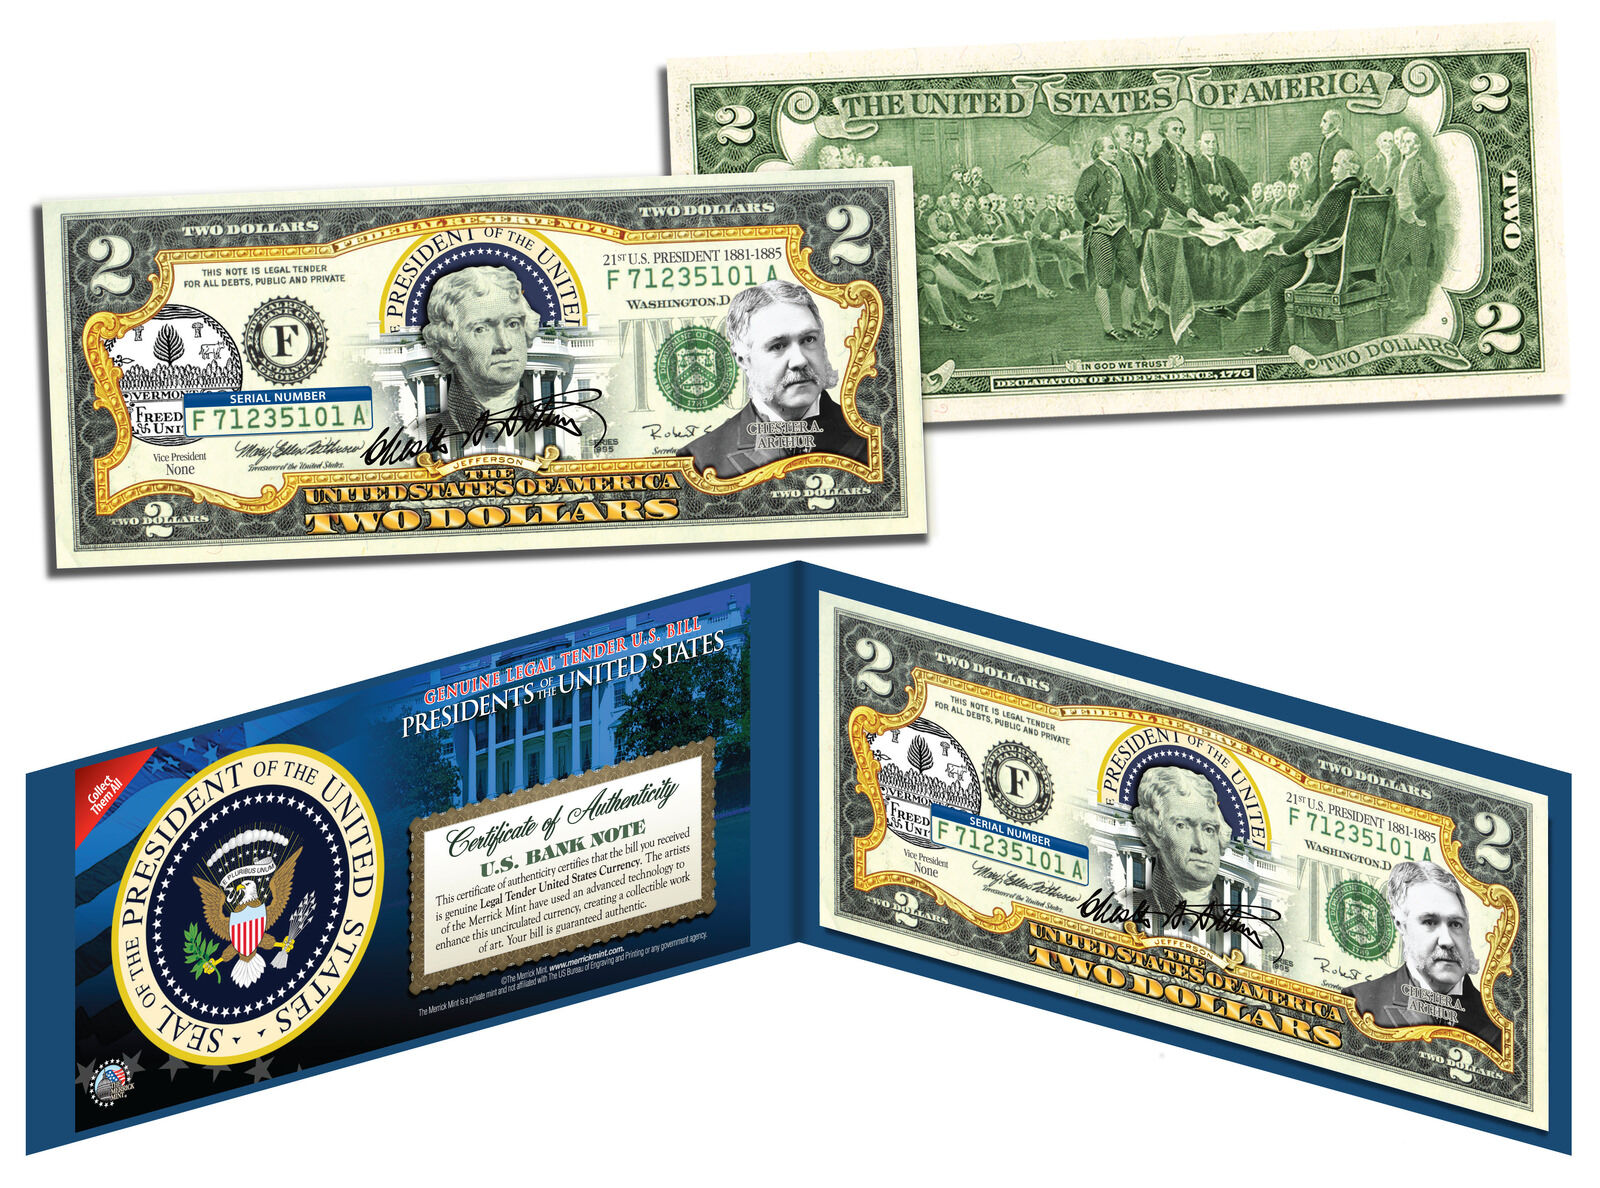 CHESTER A ARTHUR * 21st U.S. President * Colorized $2 Bill Genuine Legal Tender